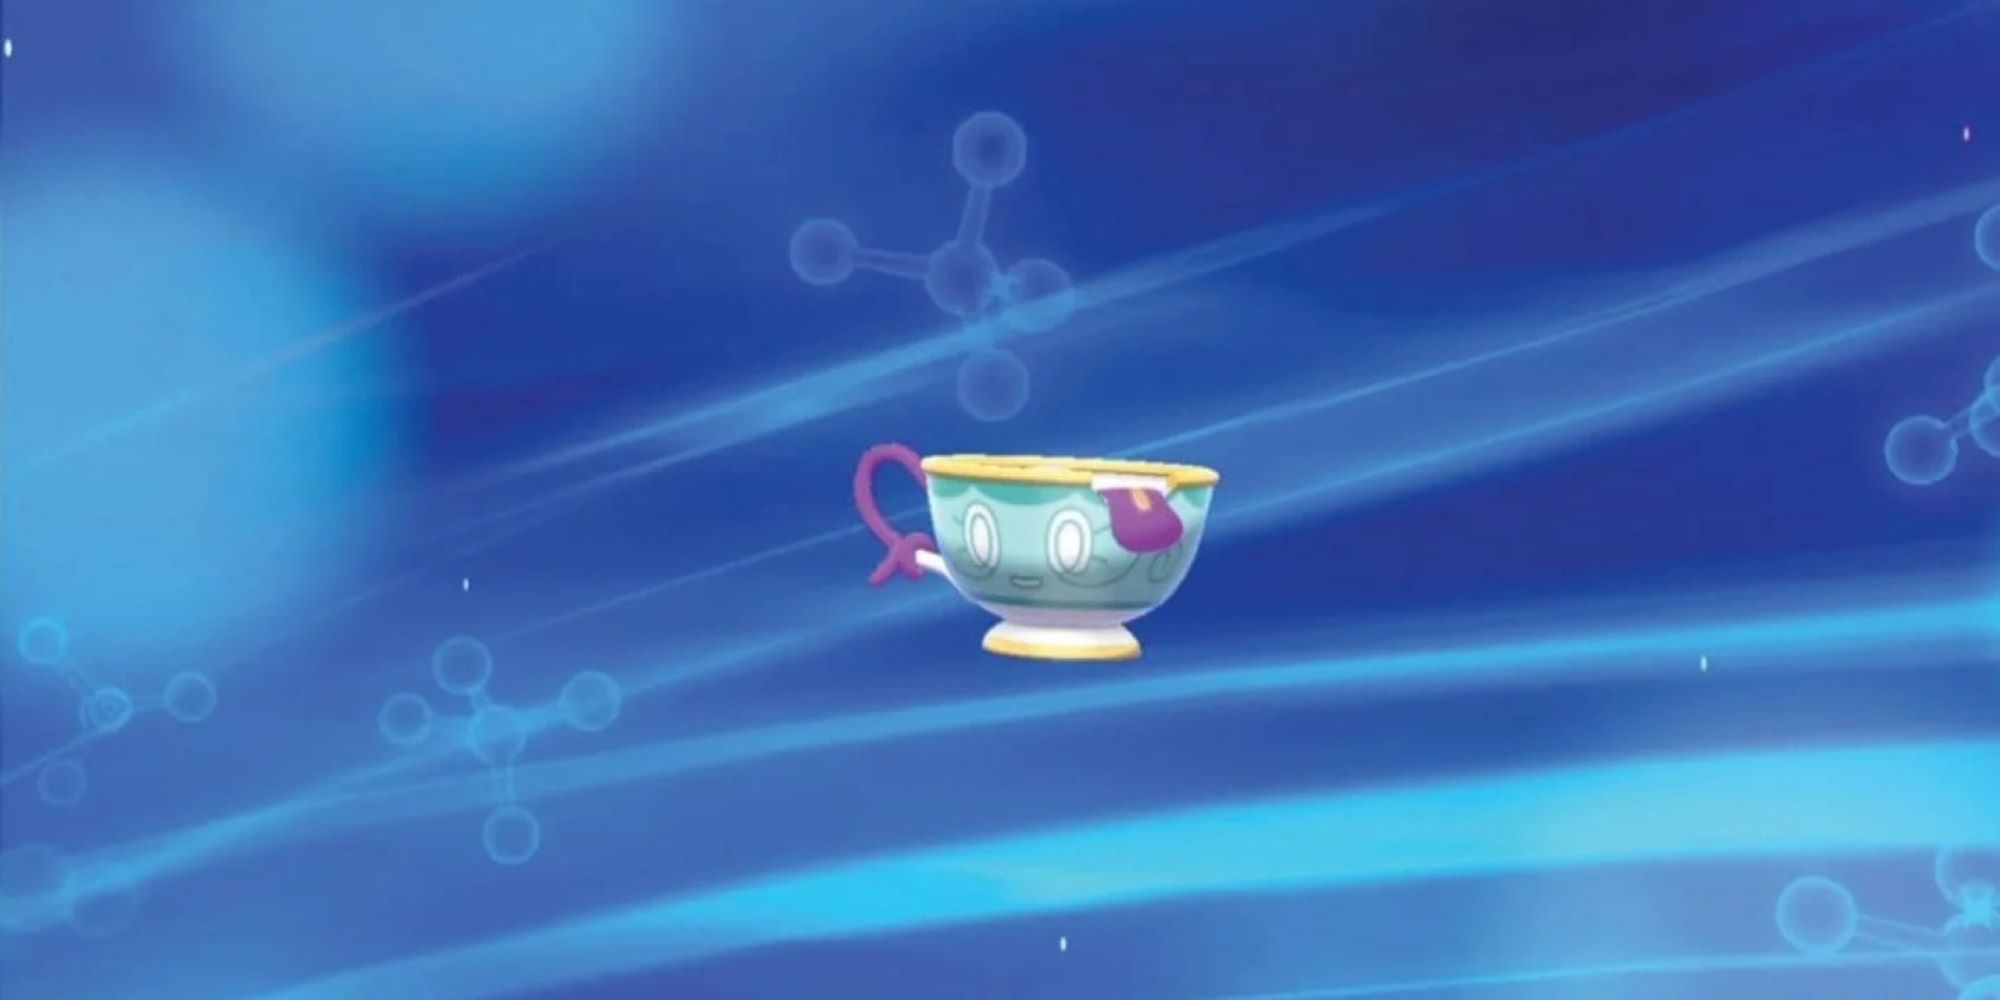 The Pokemon Sinistea on a blue background.